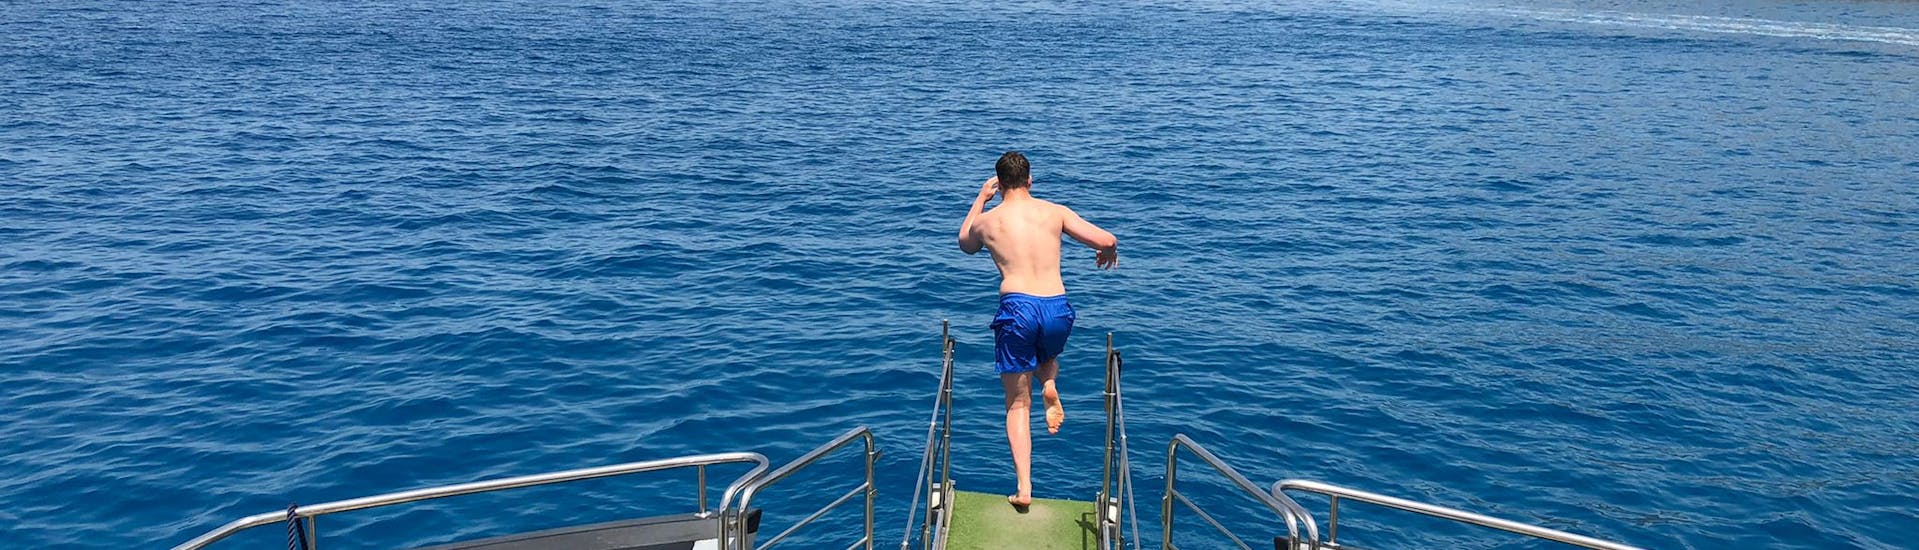 Un homme saute à l'eau lors de la Balade en catamaran autour d'Ibiza avec Activités nautiques avec Sea Experience Ibiza.